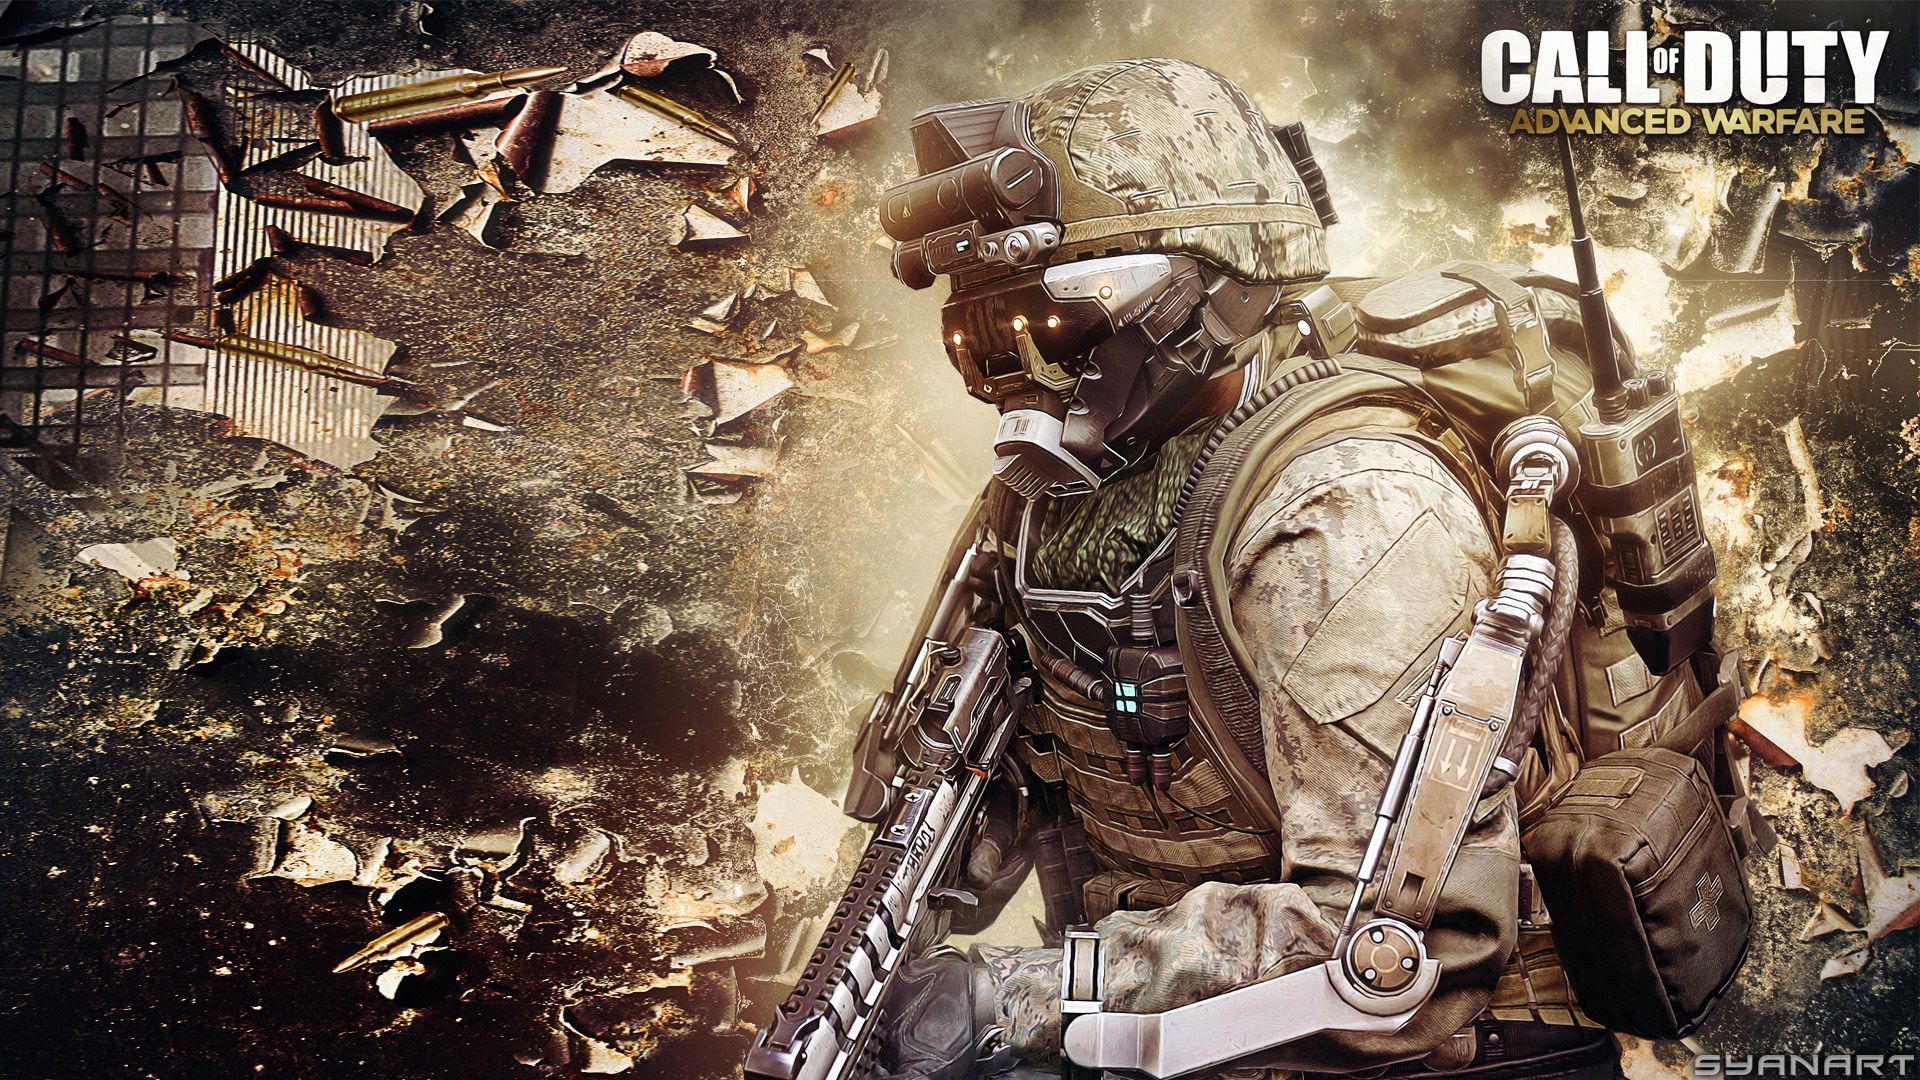 Advanced Warfare Background. Epic Warfare Wallpaper, Warfare Wallpaper and Urban Warfare Wallpaper